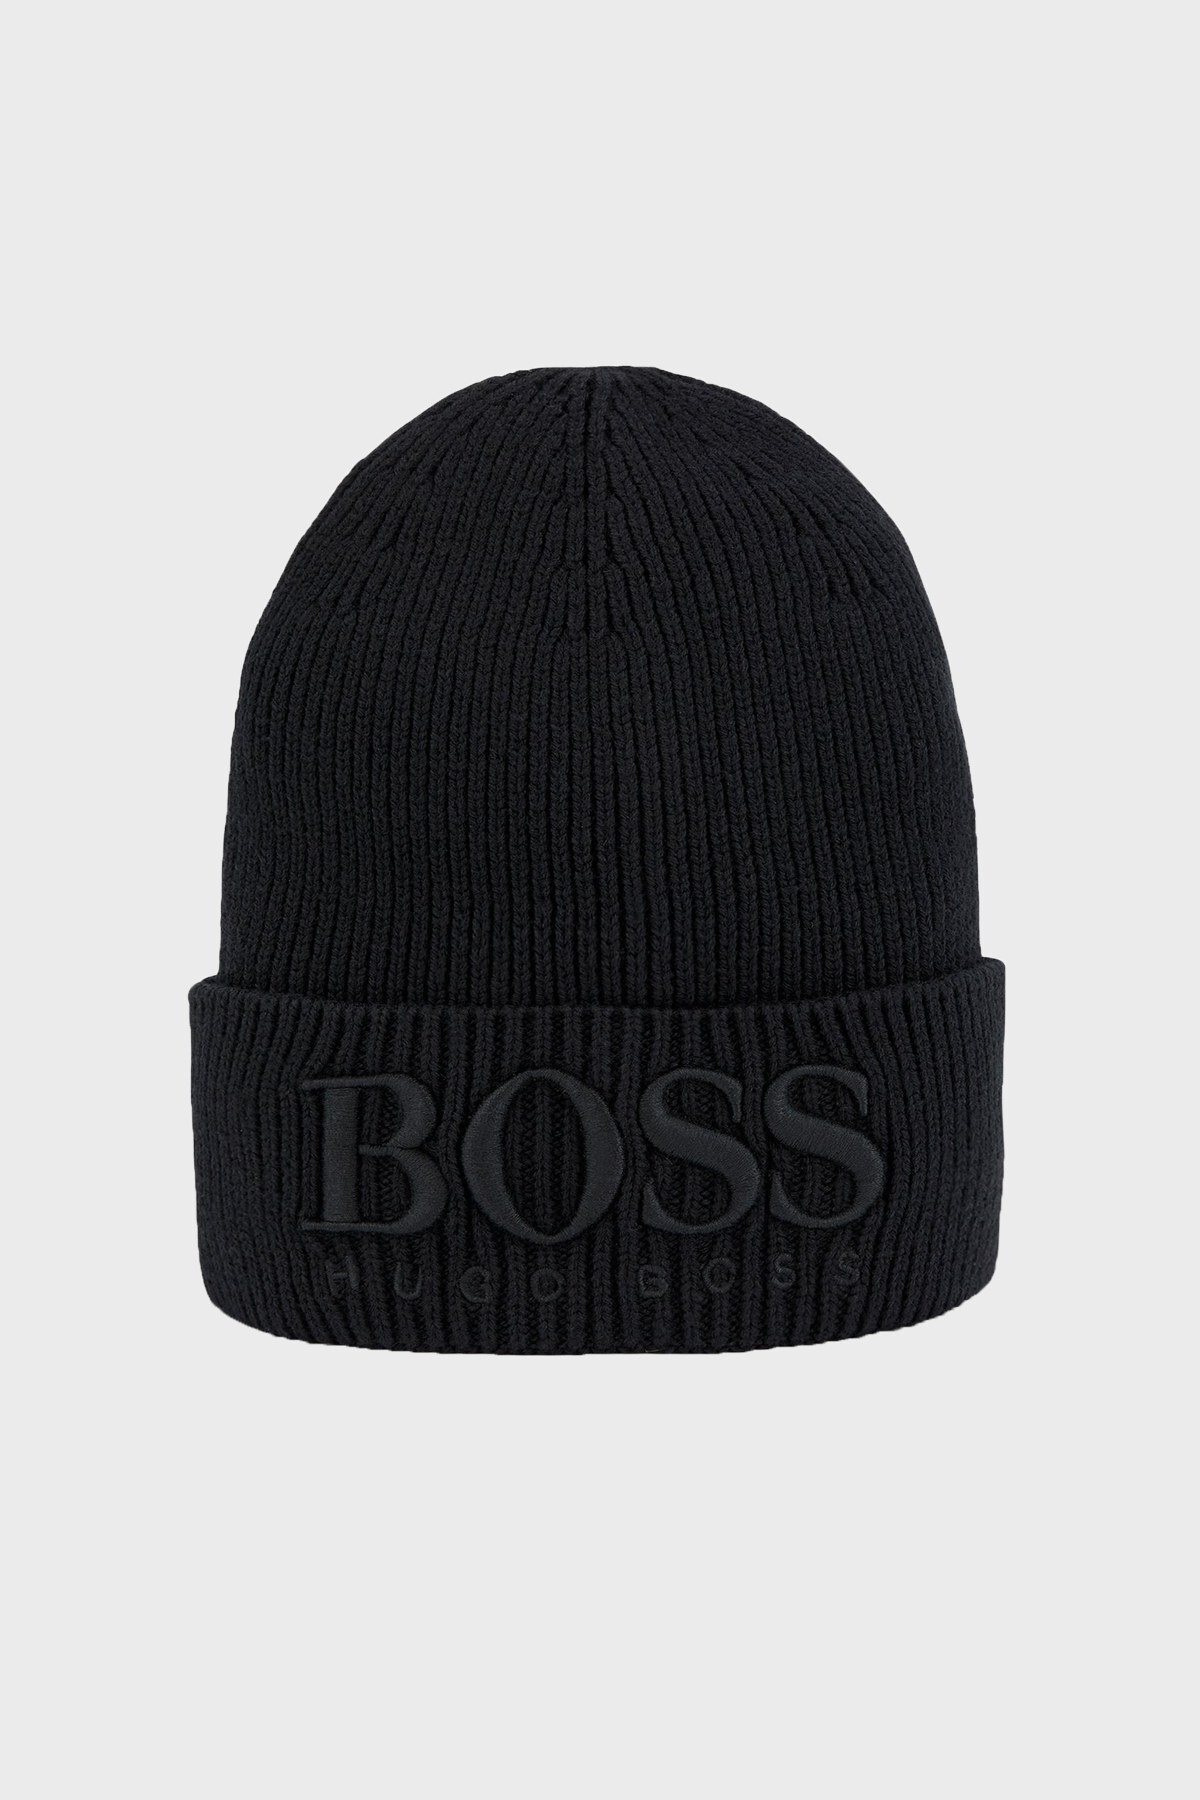 Hugo Boss Logolu Erkek Şapka 50444424 001 SİYAH